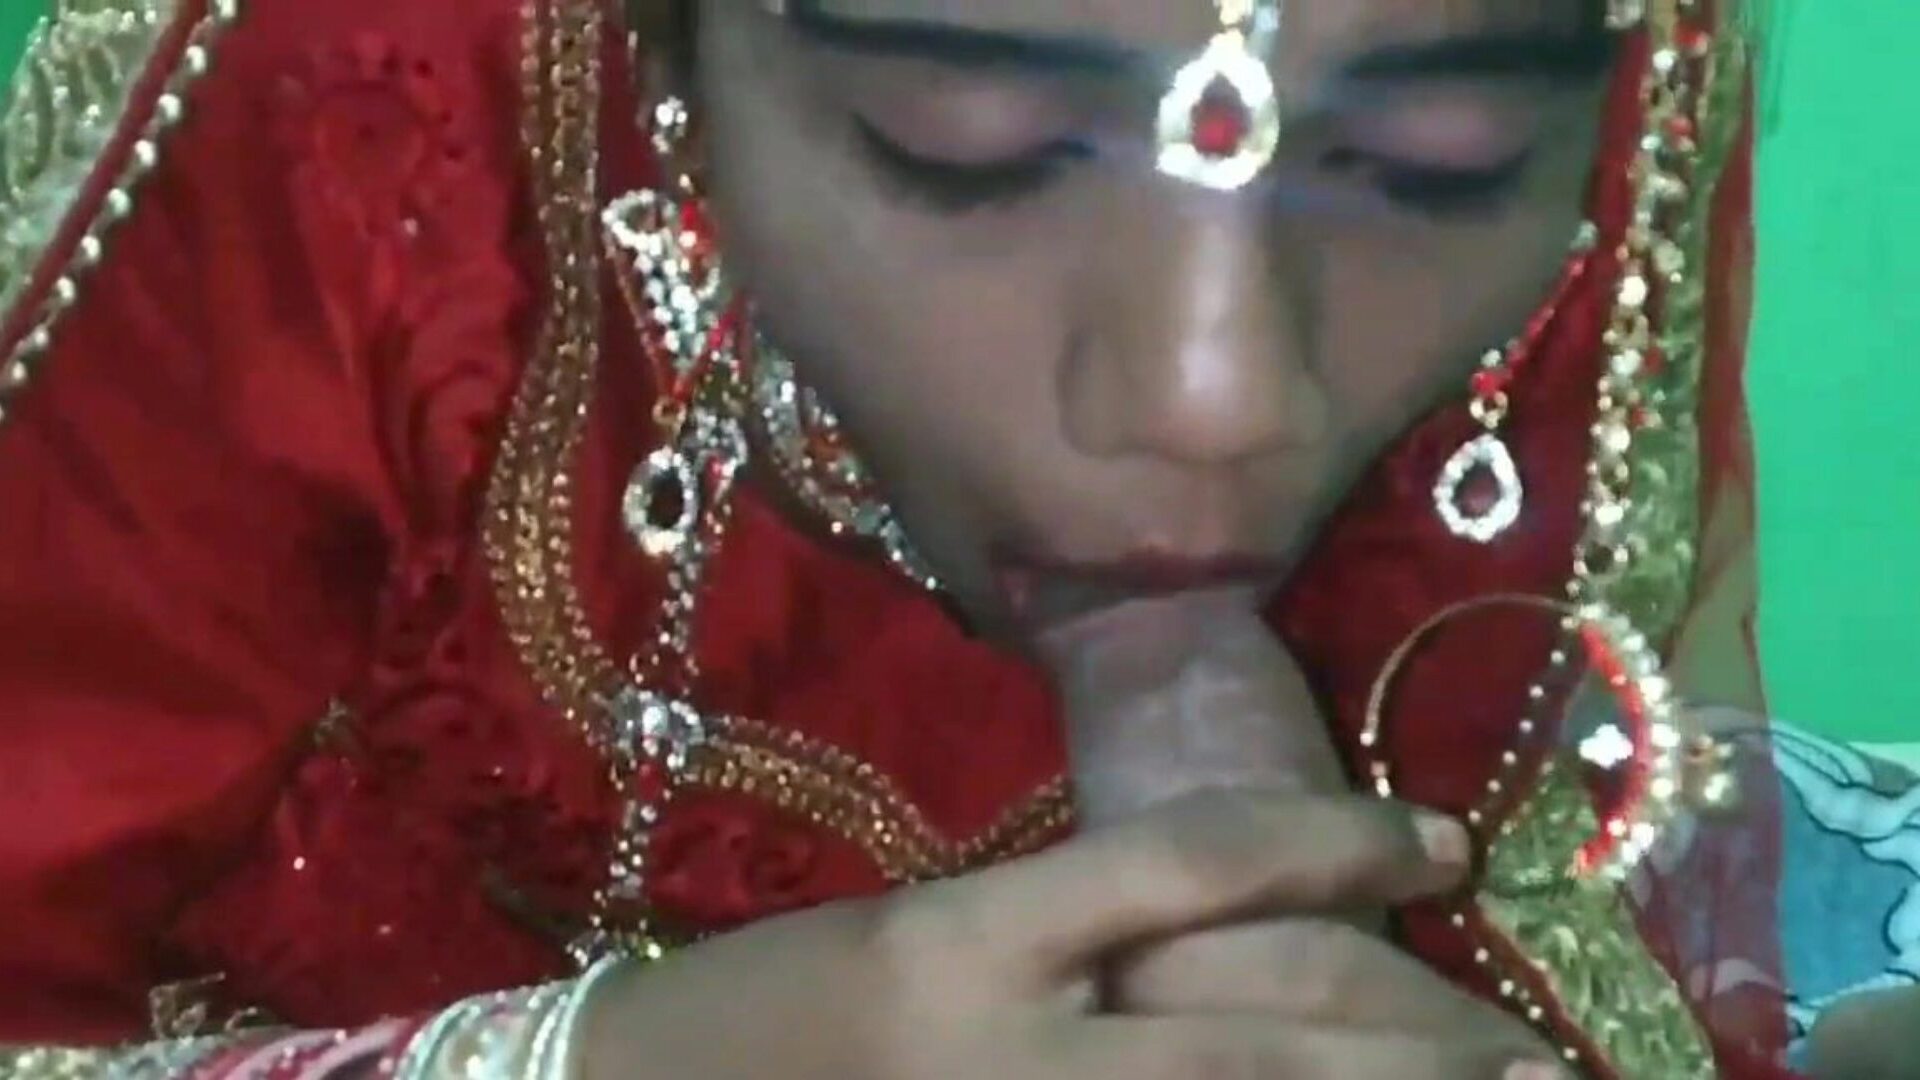 Bangla Sex Video